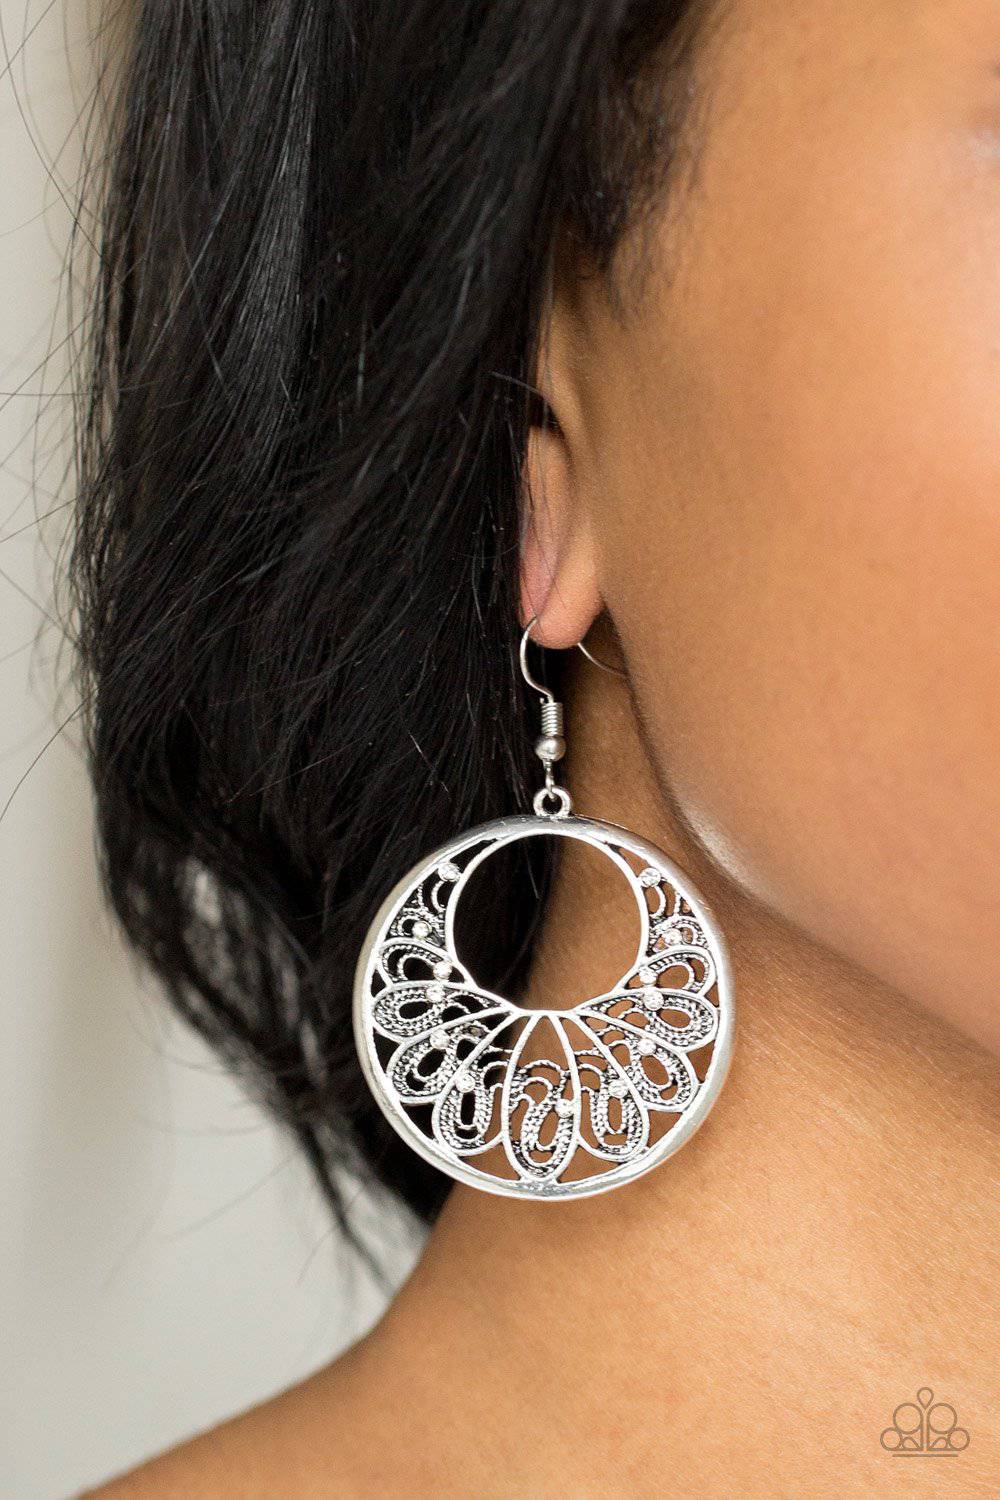 Fancy That - White Rhinestone Earrings - Paparazzi Accessories - GlaMarous Titi Jewels